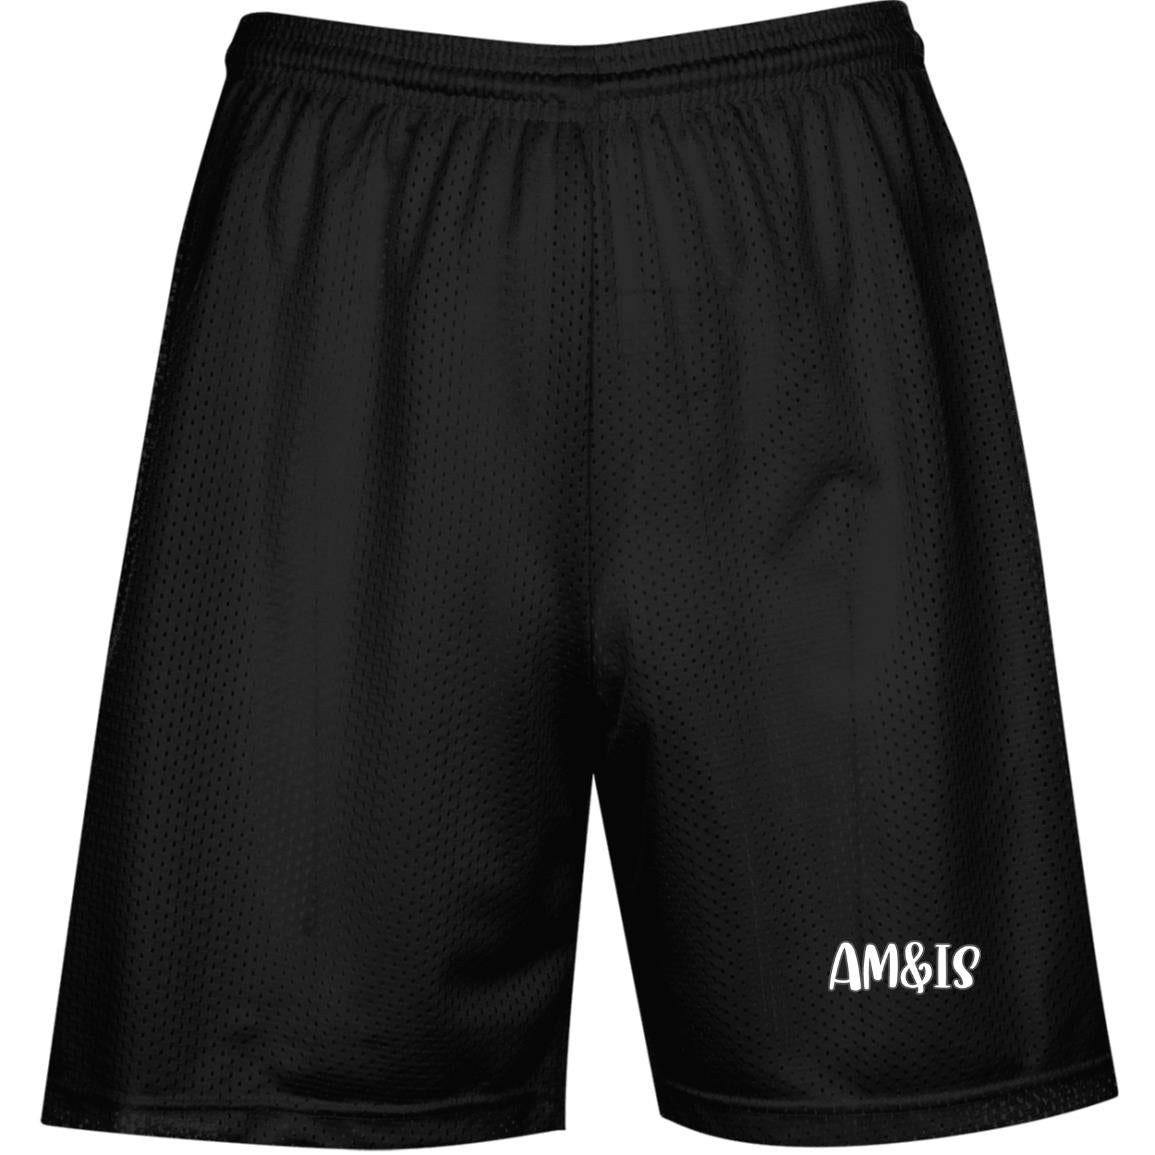 BLACK Am&IS Activewear Performance Mesh Shorts - men's shorts at TFC&H Co.